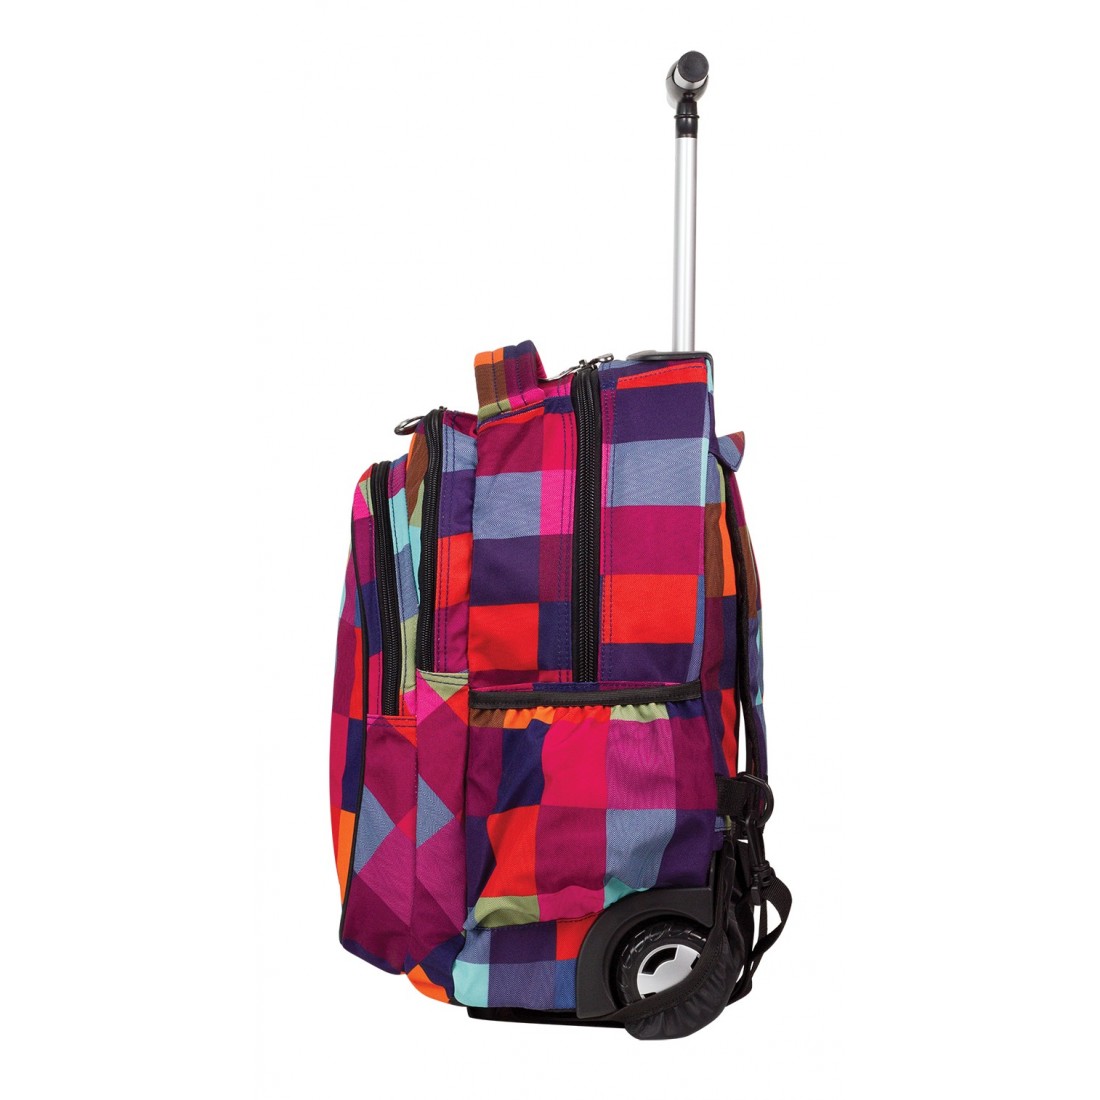 Plecak na kółkach CoolPack Junior MOSAIC w kolorową kratkę CP 003a - plecak-tornister.pl